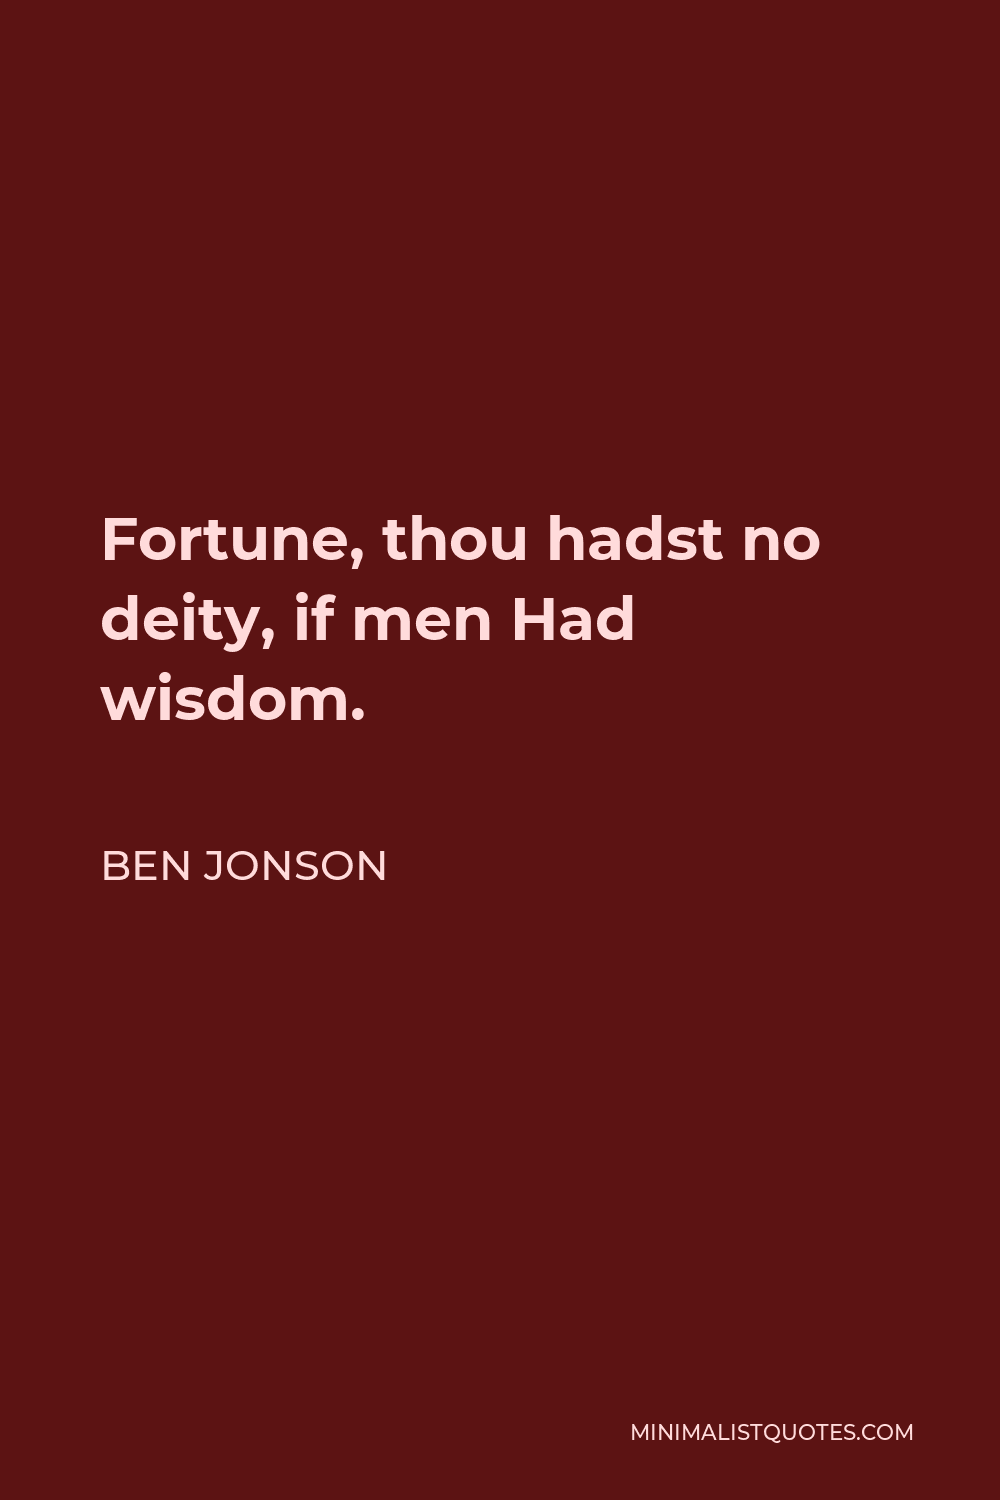 Ben Jonson Quote - Fortune, thou hadst no deity, if men Had wisdom.